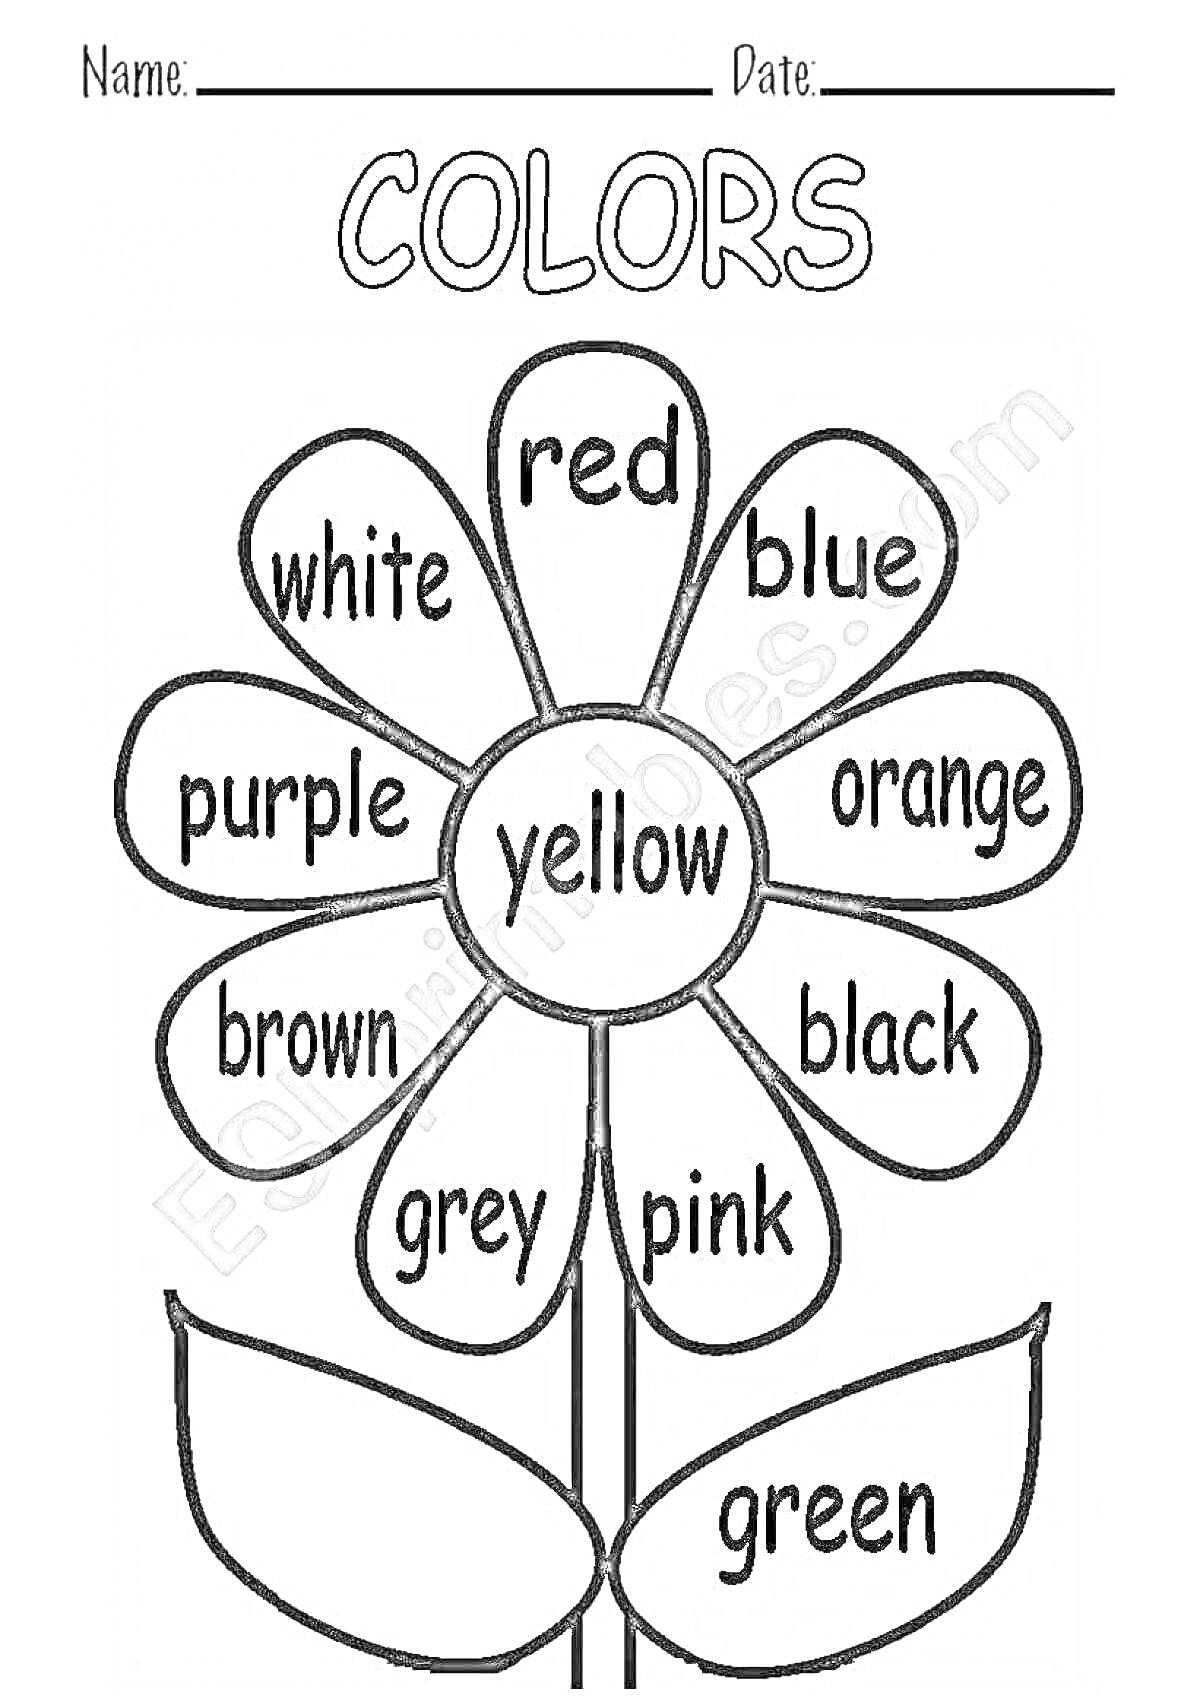 Цветок с цветами, написанными на английском языке для 2 класса. Названия цветов: white, red, blue, orange, purple, yellow, black, brown, grey, pink, green.